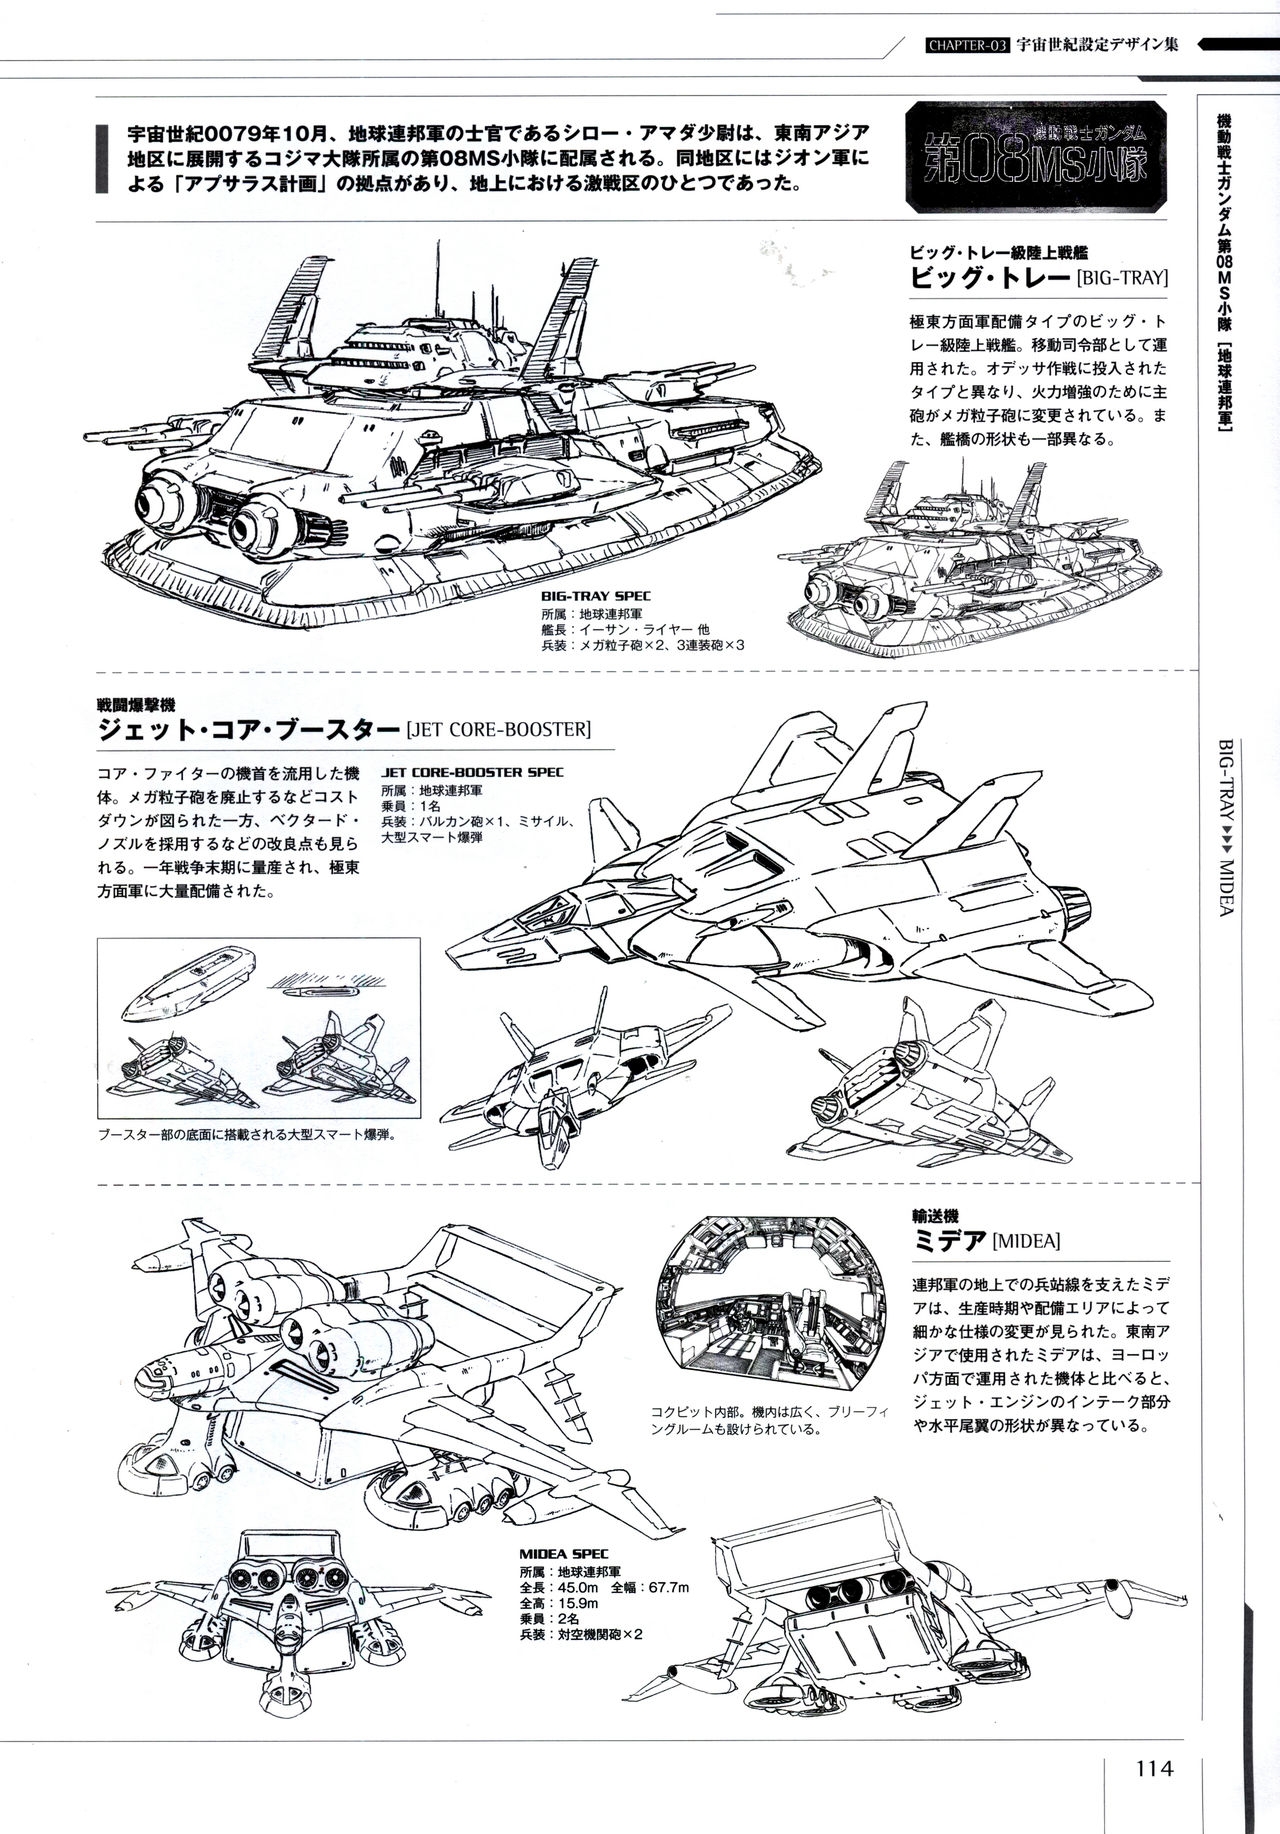 Mobile Suit Gundam - Ship & Aerospace Plane Encyclopedia - Revised Edition 119